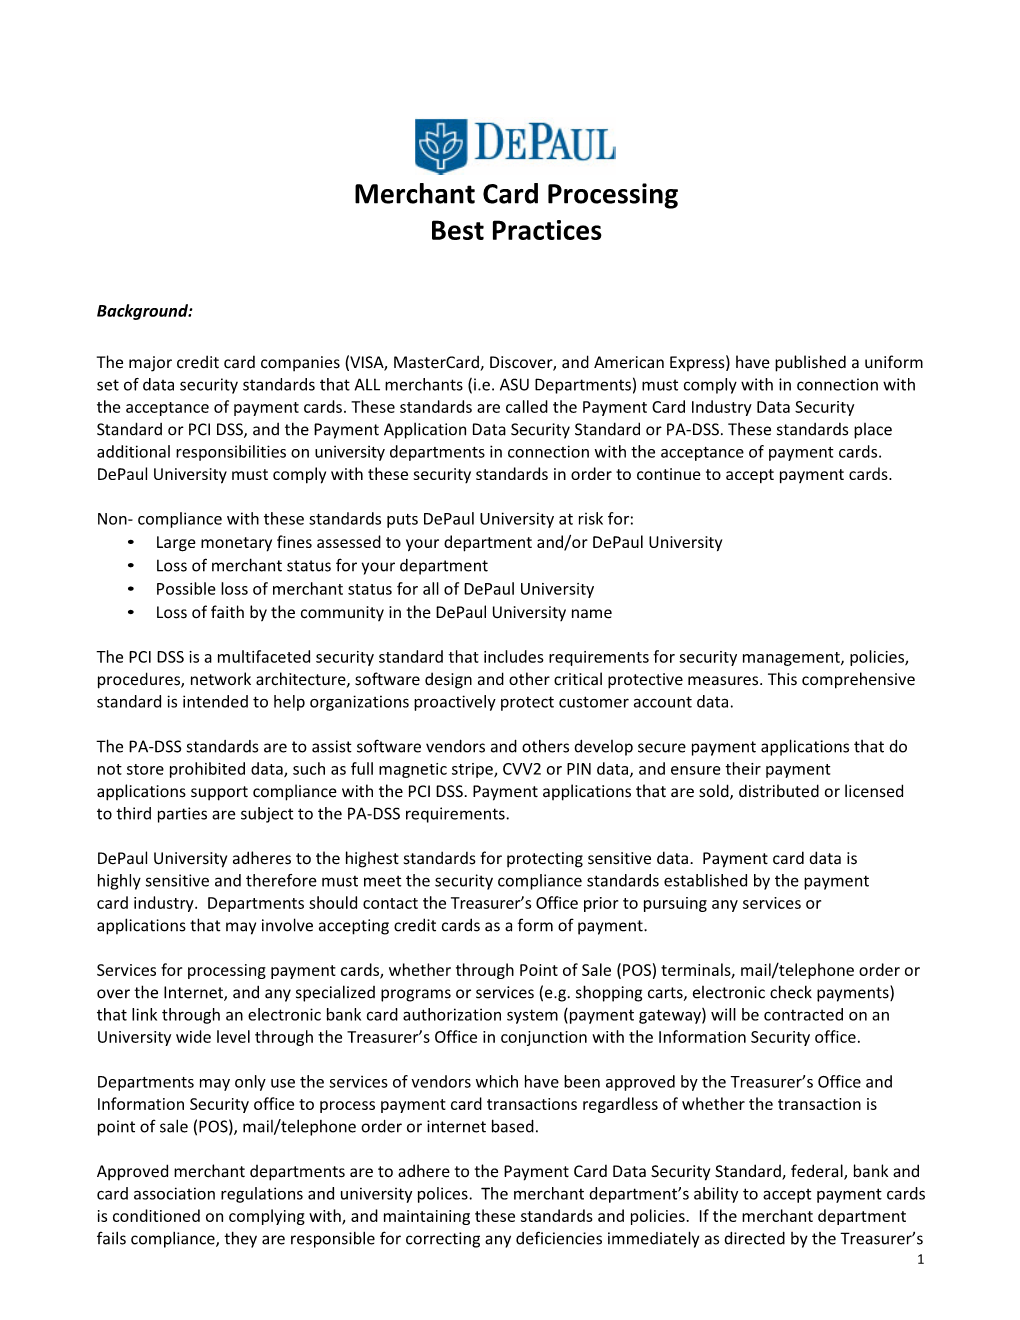 Merchant Card Processing Best Practices